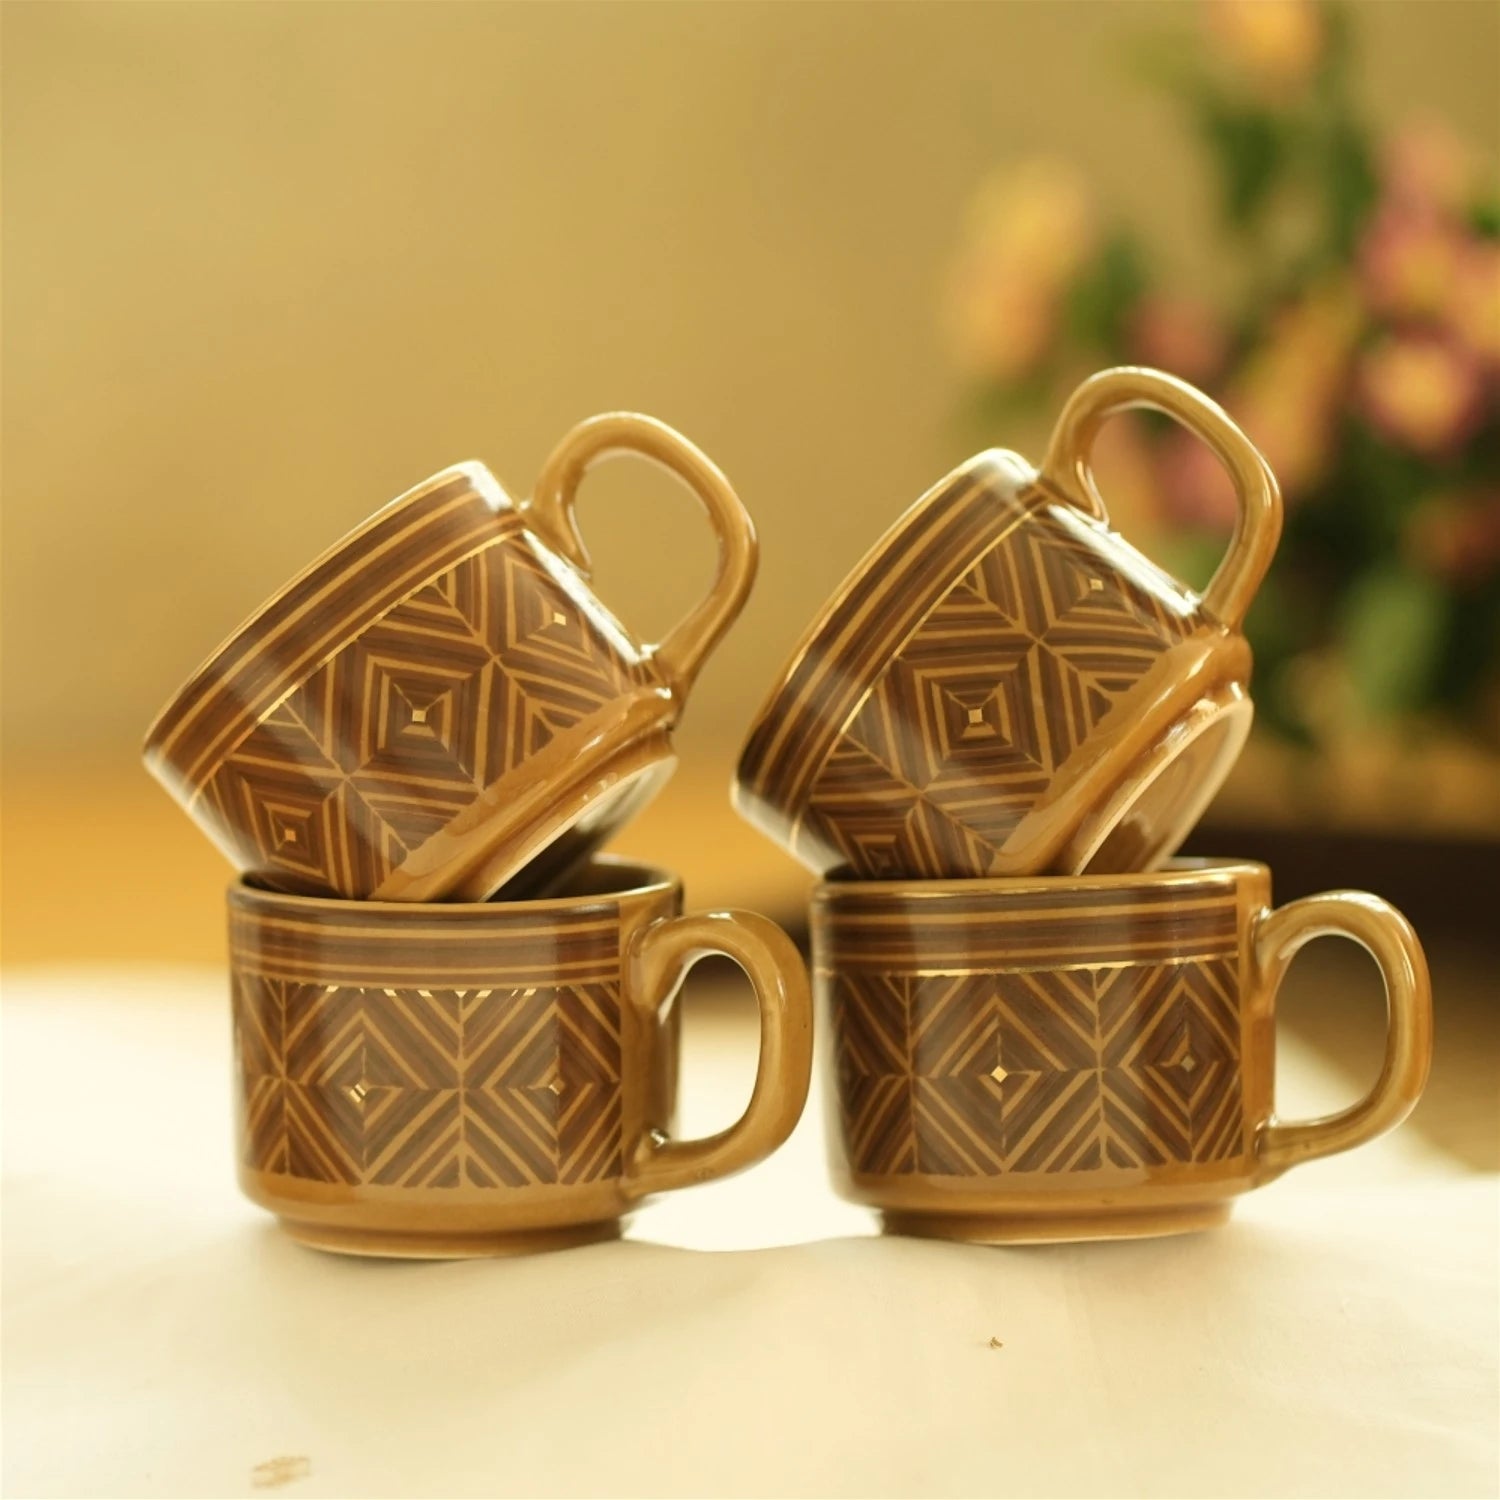 Tea Set 22-Piece Porcelain Ceramic Coffee Tea Gift Sets Cups Saucer Service  for | eBay